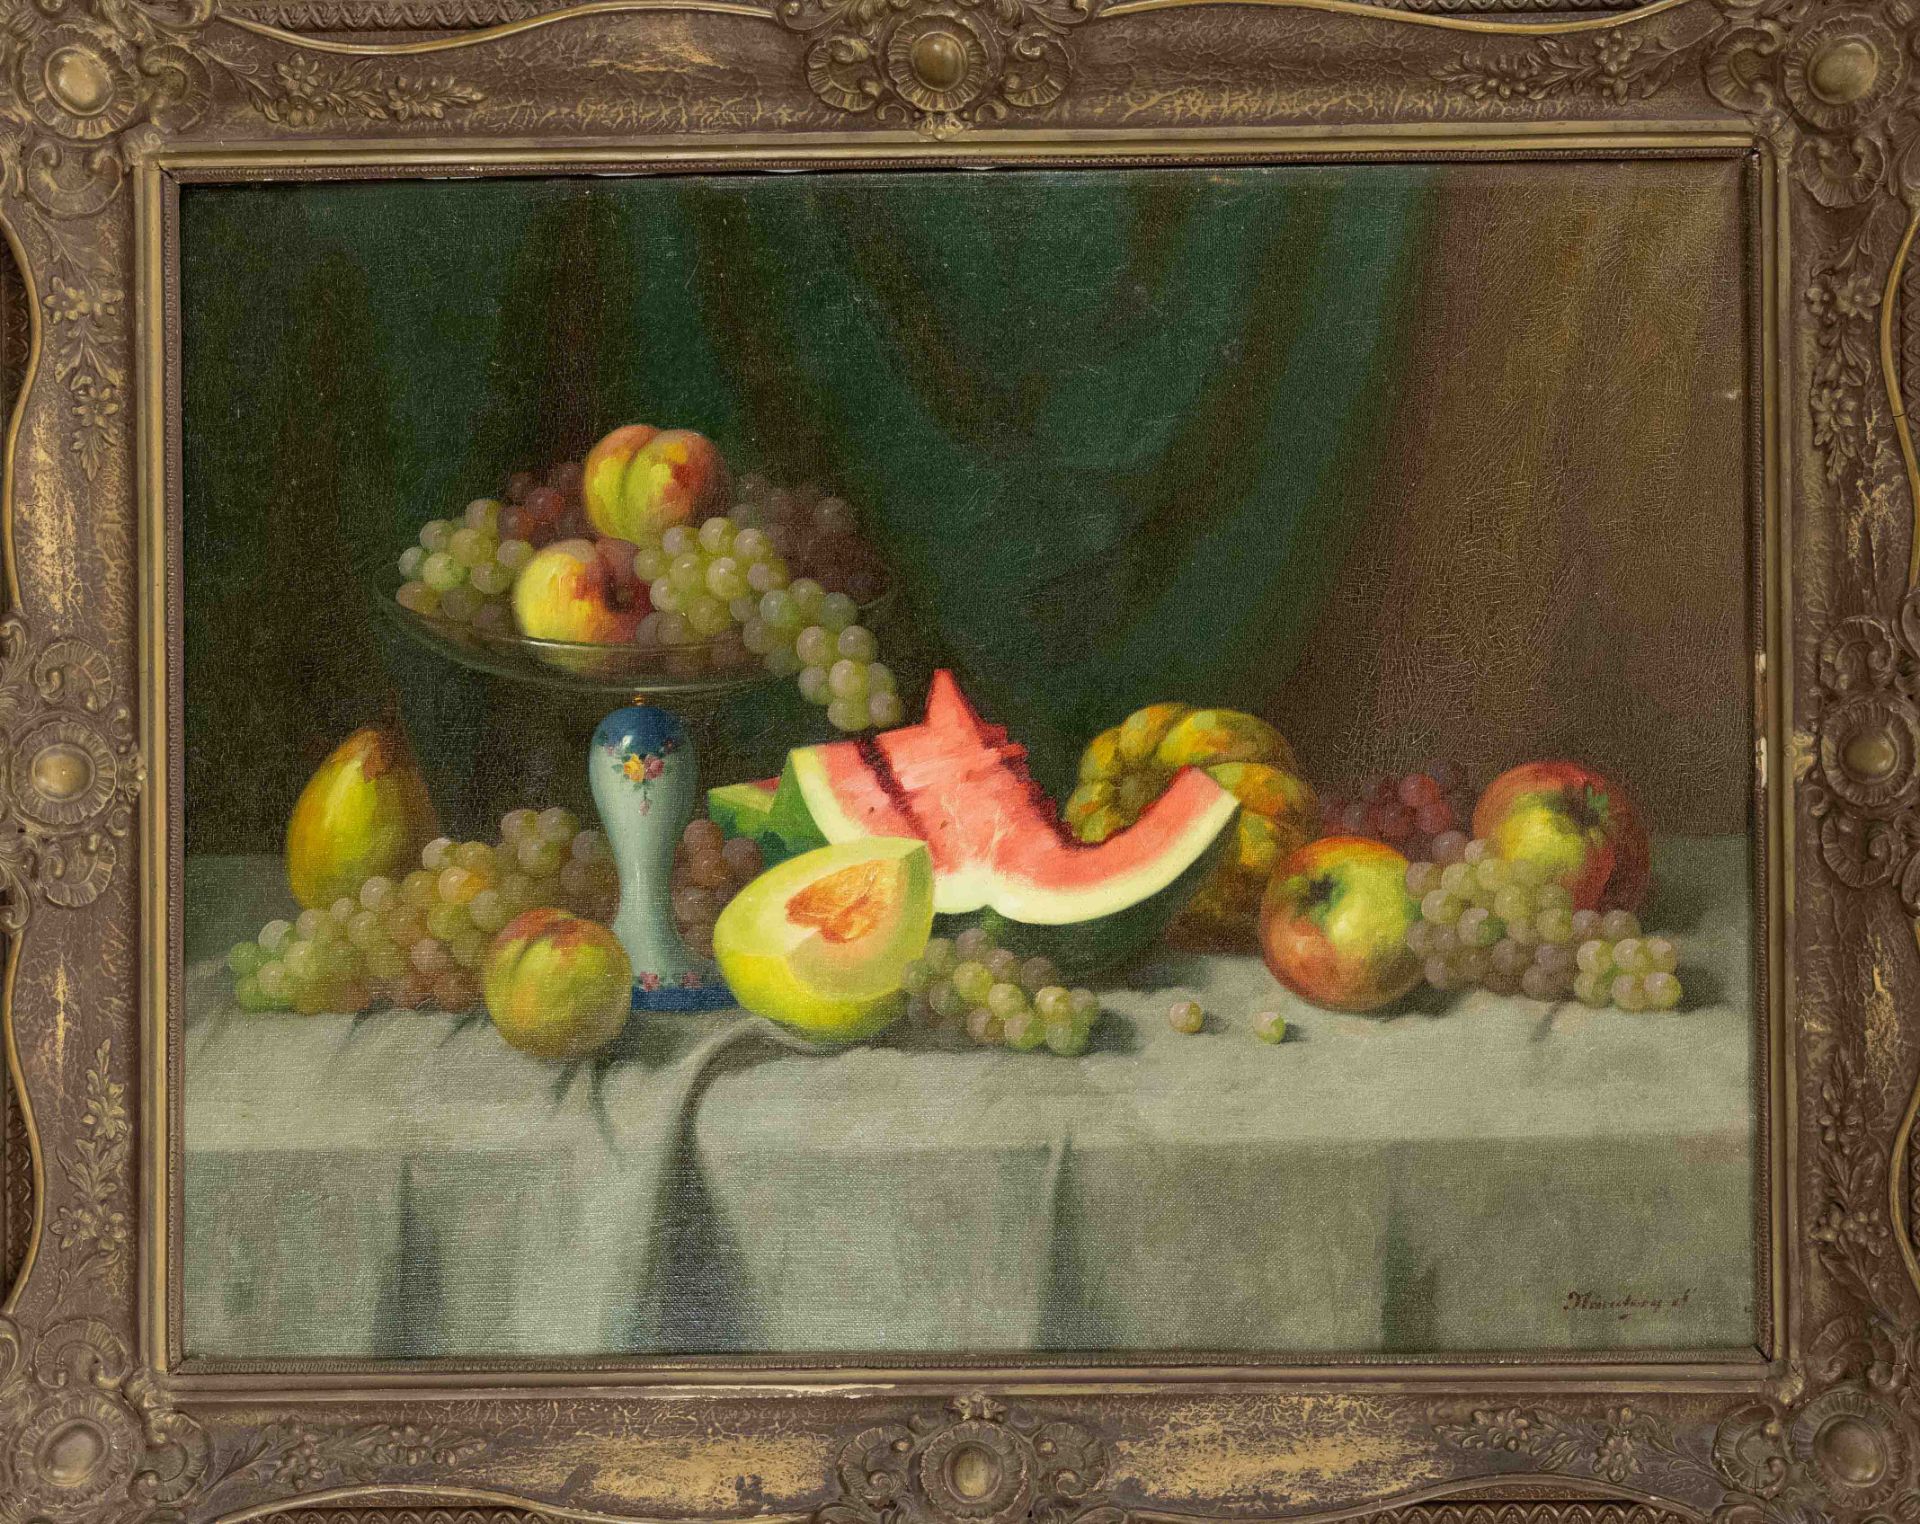 Sandor Nandory, Hungarian still life painter c. 1920, large fruit still life with melon, oil on